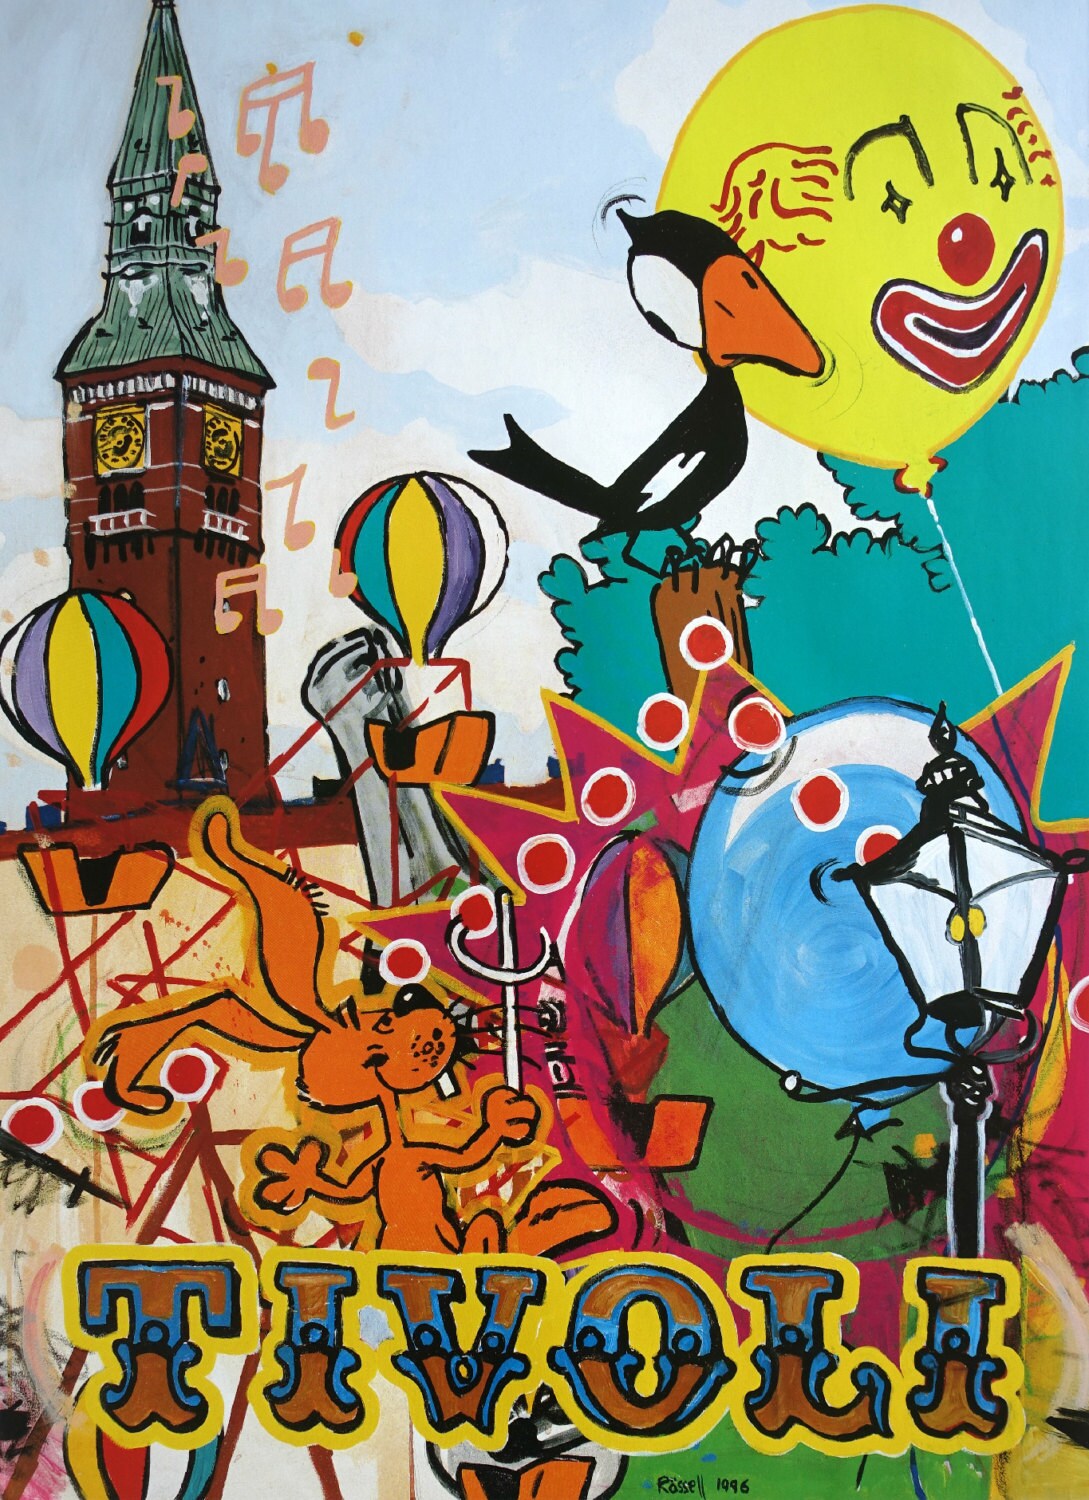 1996 Tivoli Gardens by Peter Rössell - Original Vintage Poster